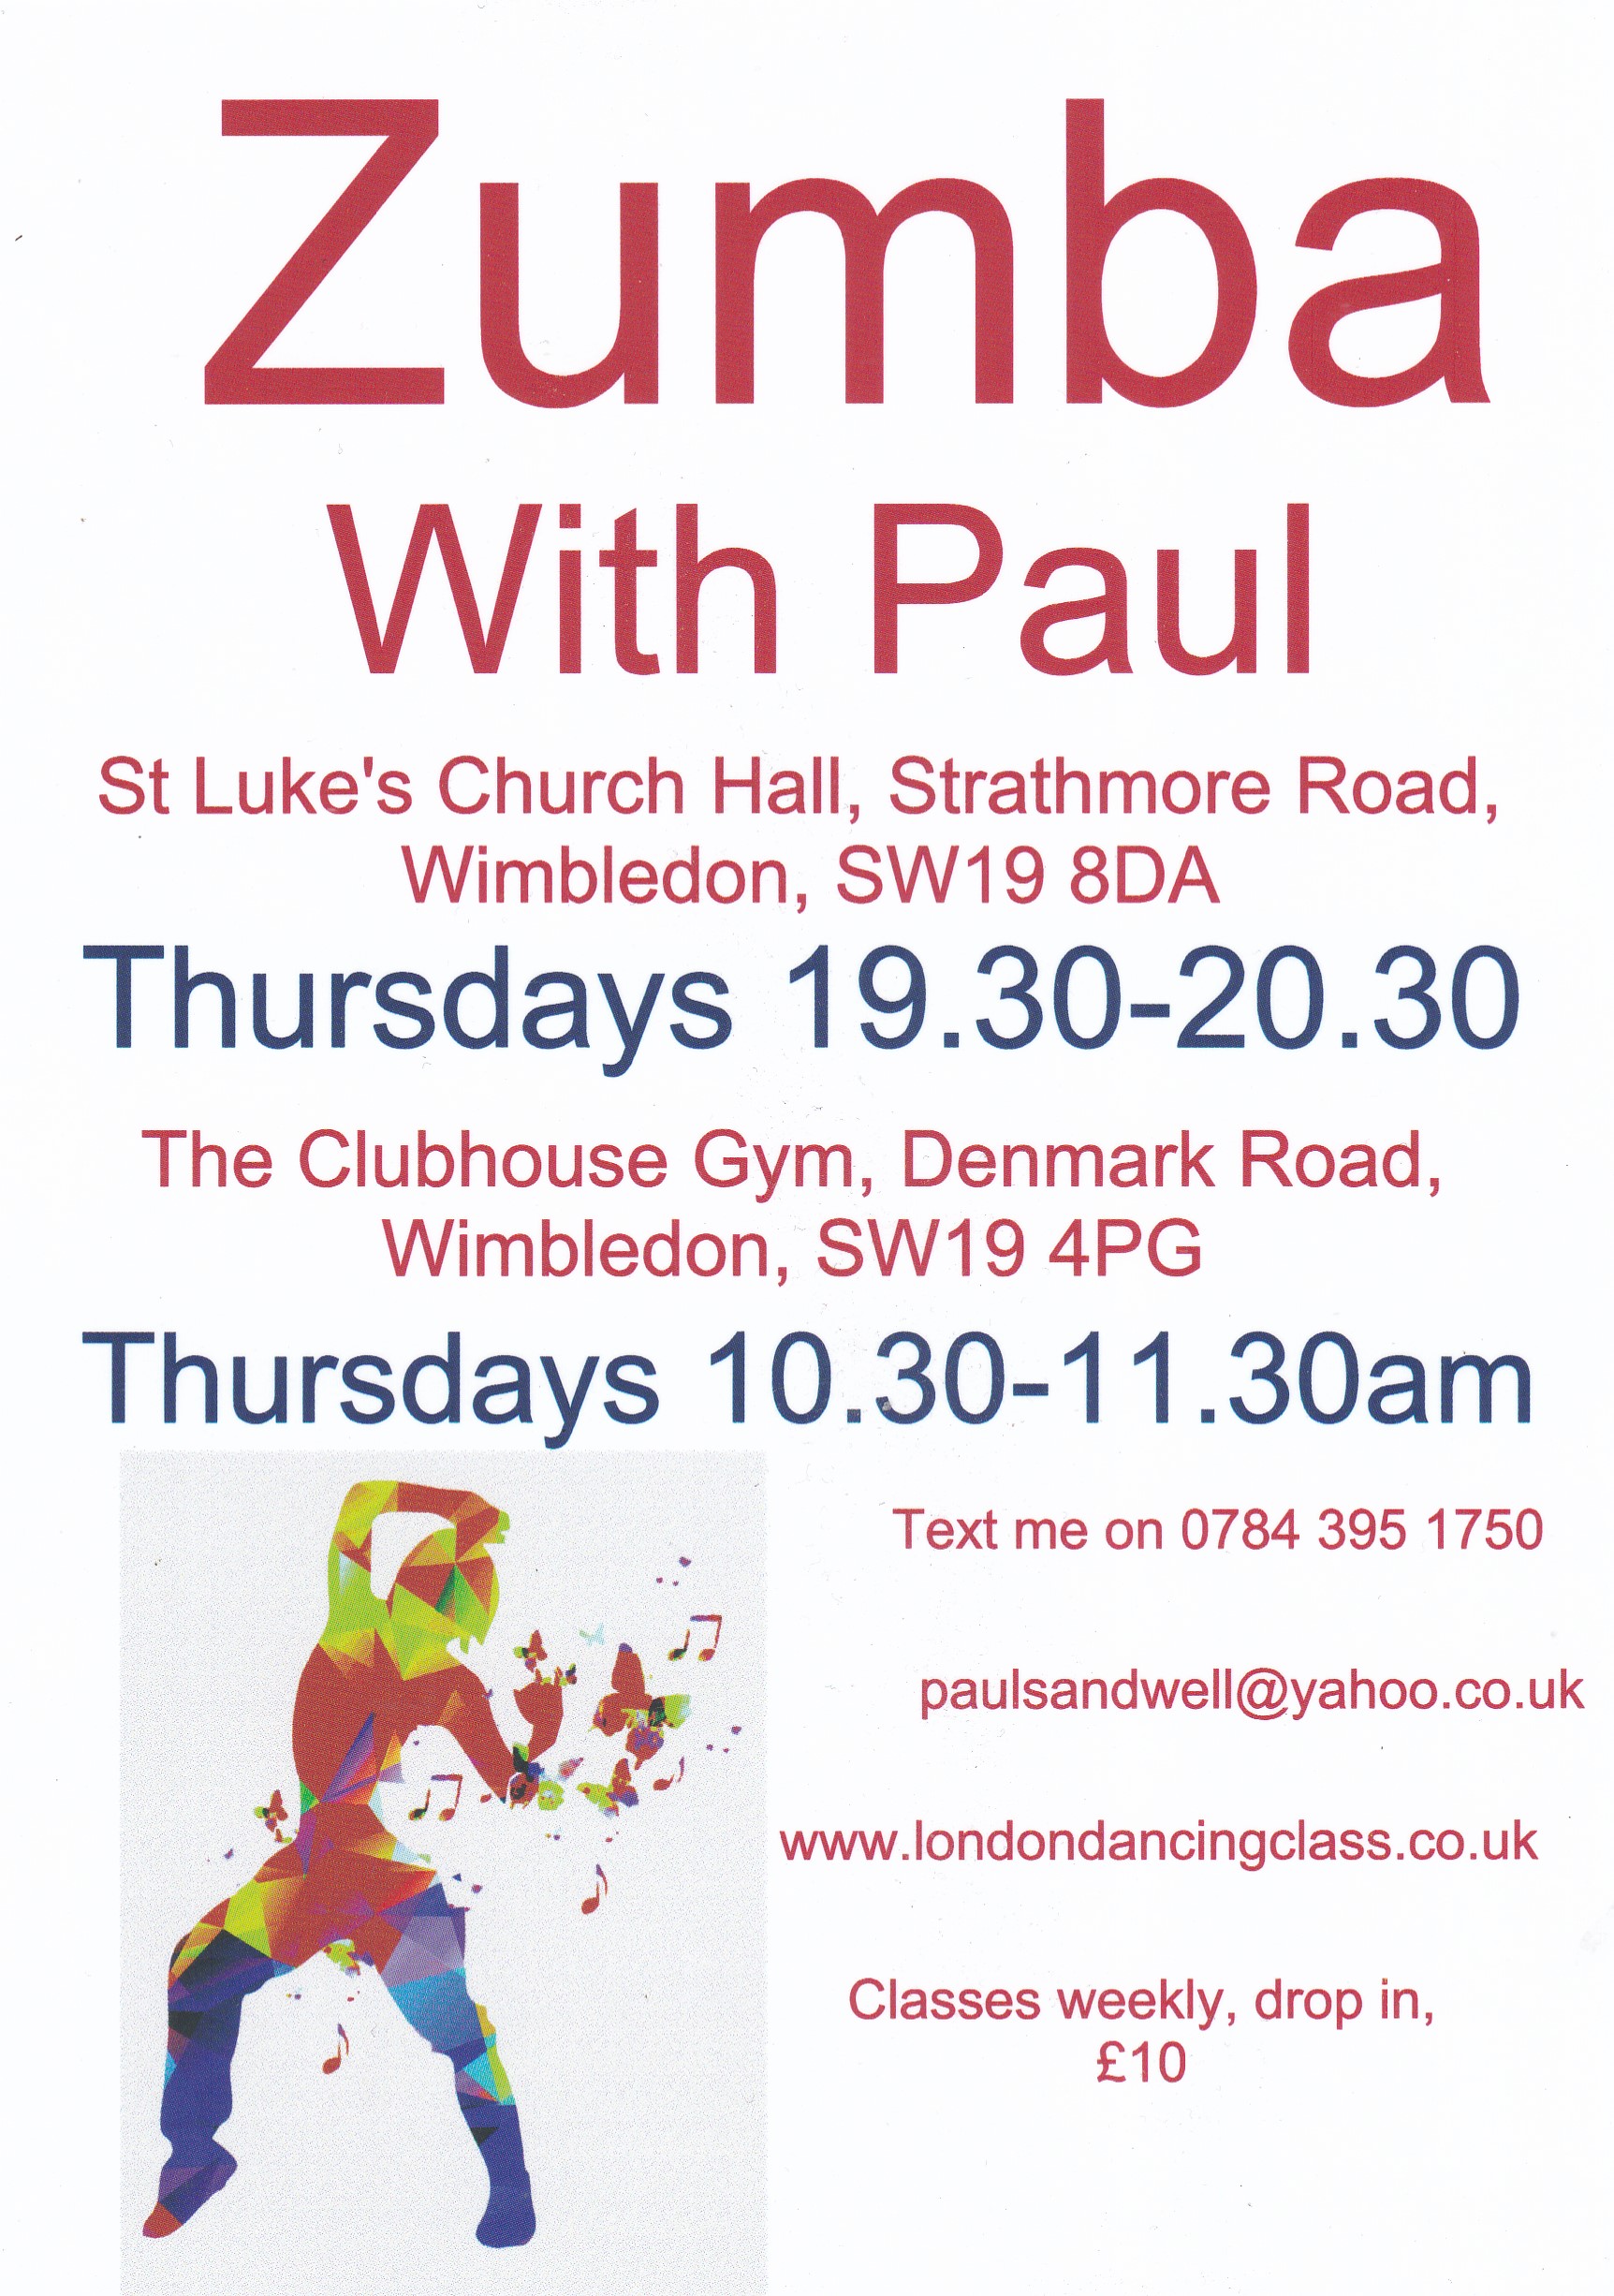 Southfields Zumba dance class Earlsfield Zumba dance class.  Have fun in my Zumba dance classes for all at Soutfields and Earlsfield.